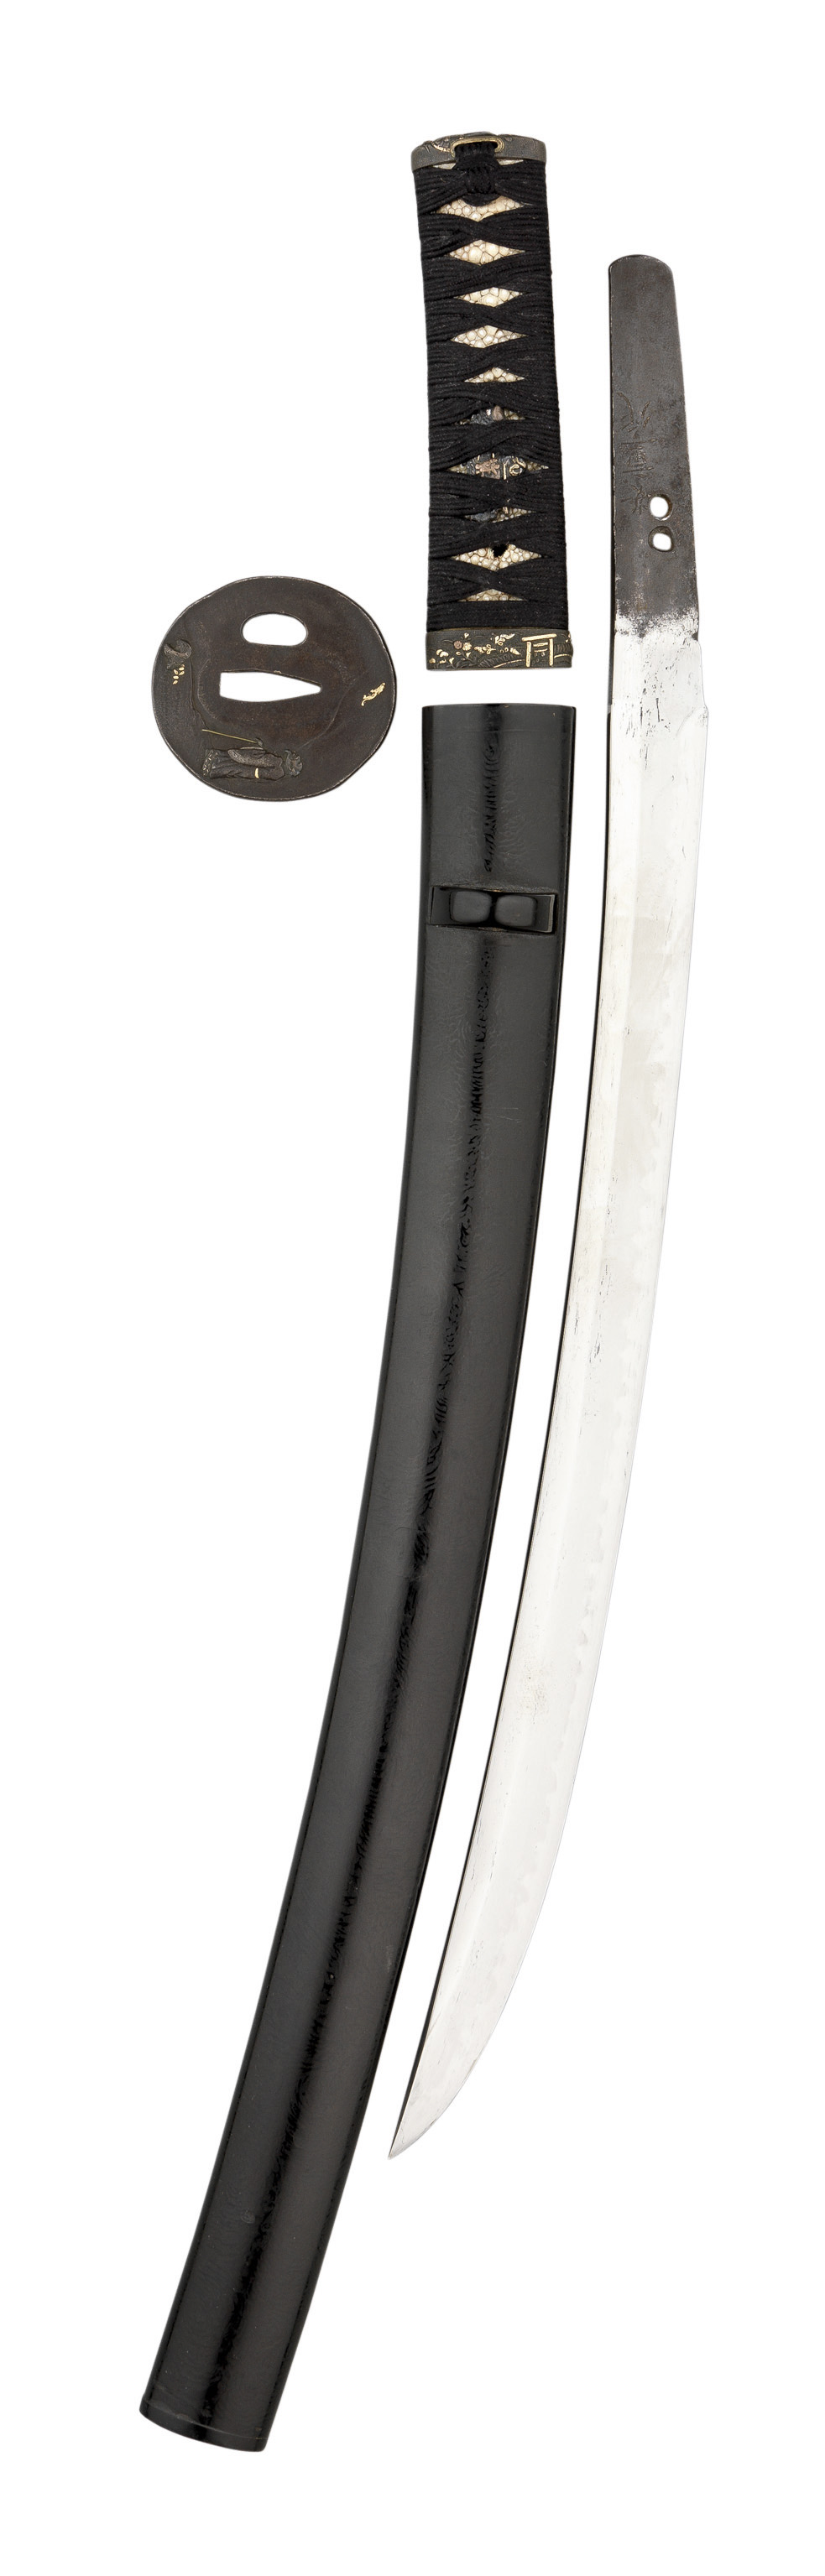 A JAPANESE SHORTSWORD (WAKIZASHI) with slightly curved single-edged blade with wavy hamon, tang